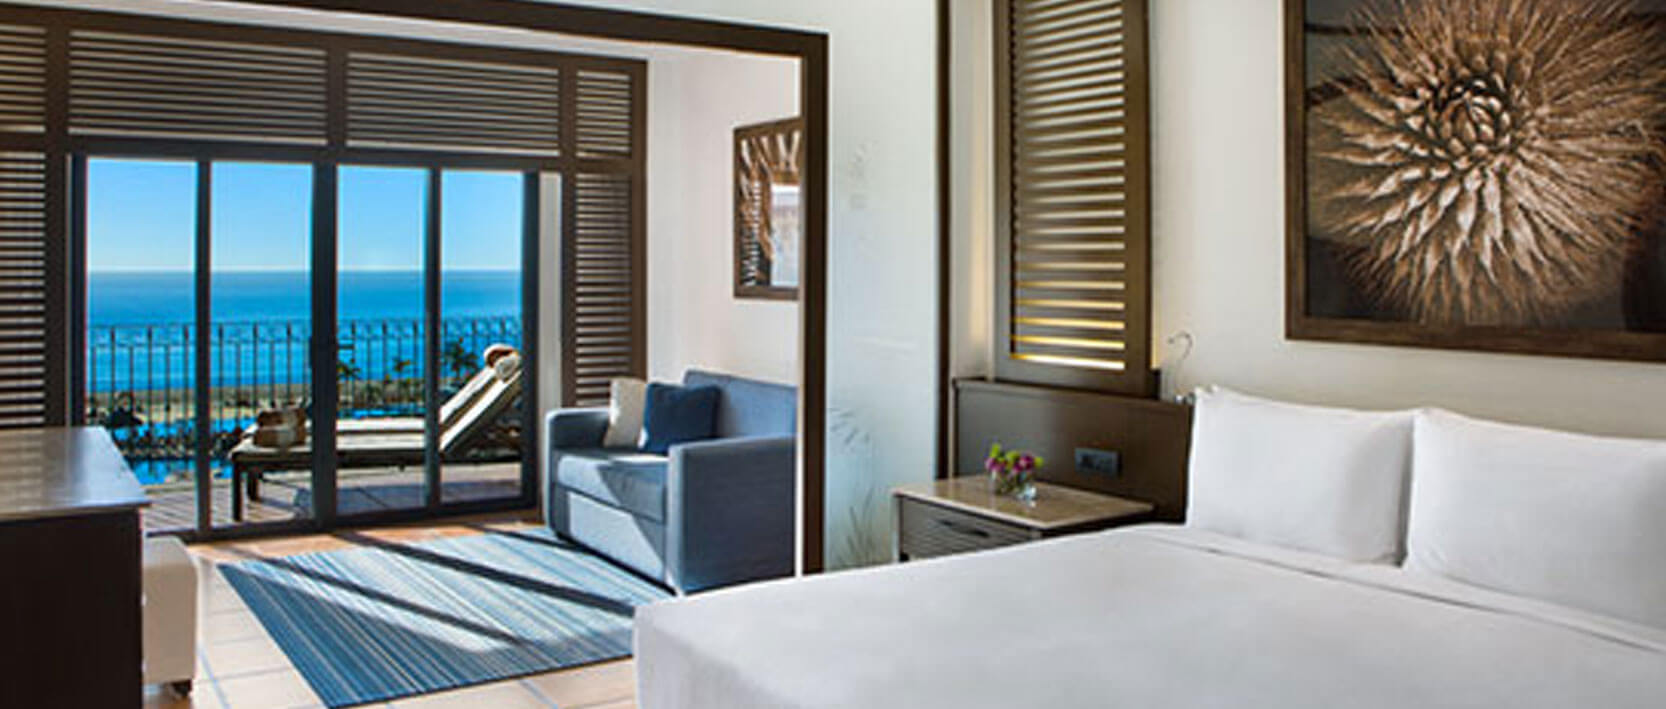 Hyatt Ziva Los Cabos Accommodations - Ocean View One Bedroom Master Suite